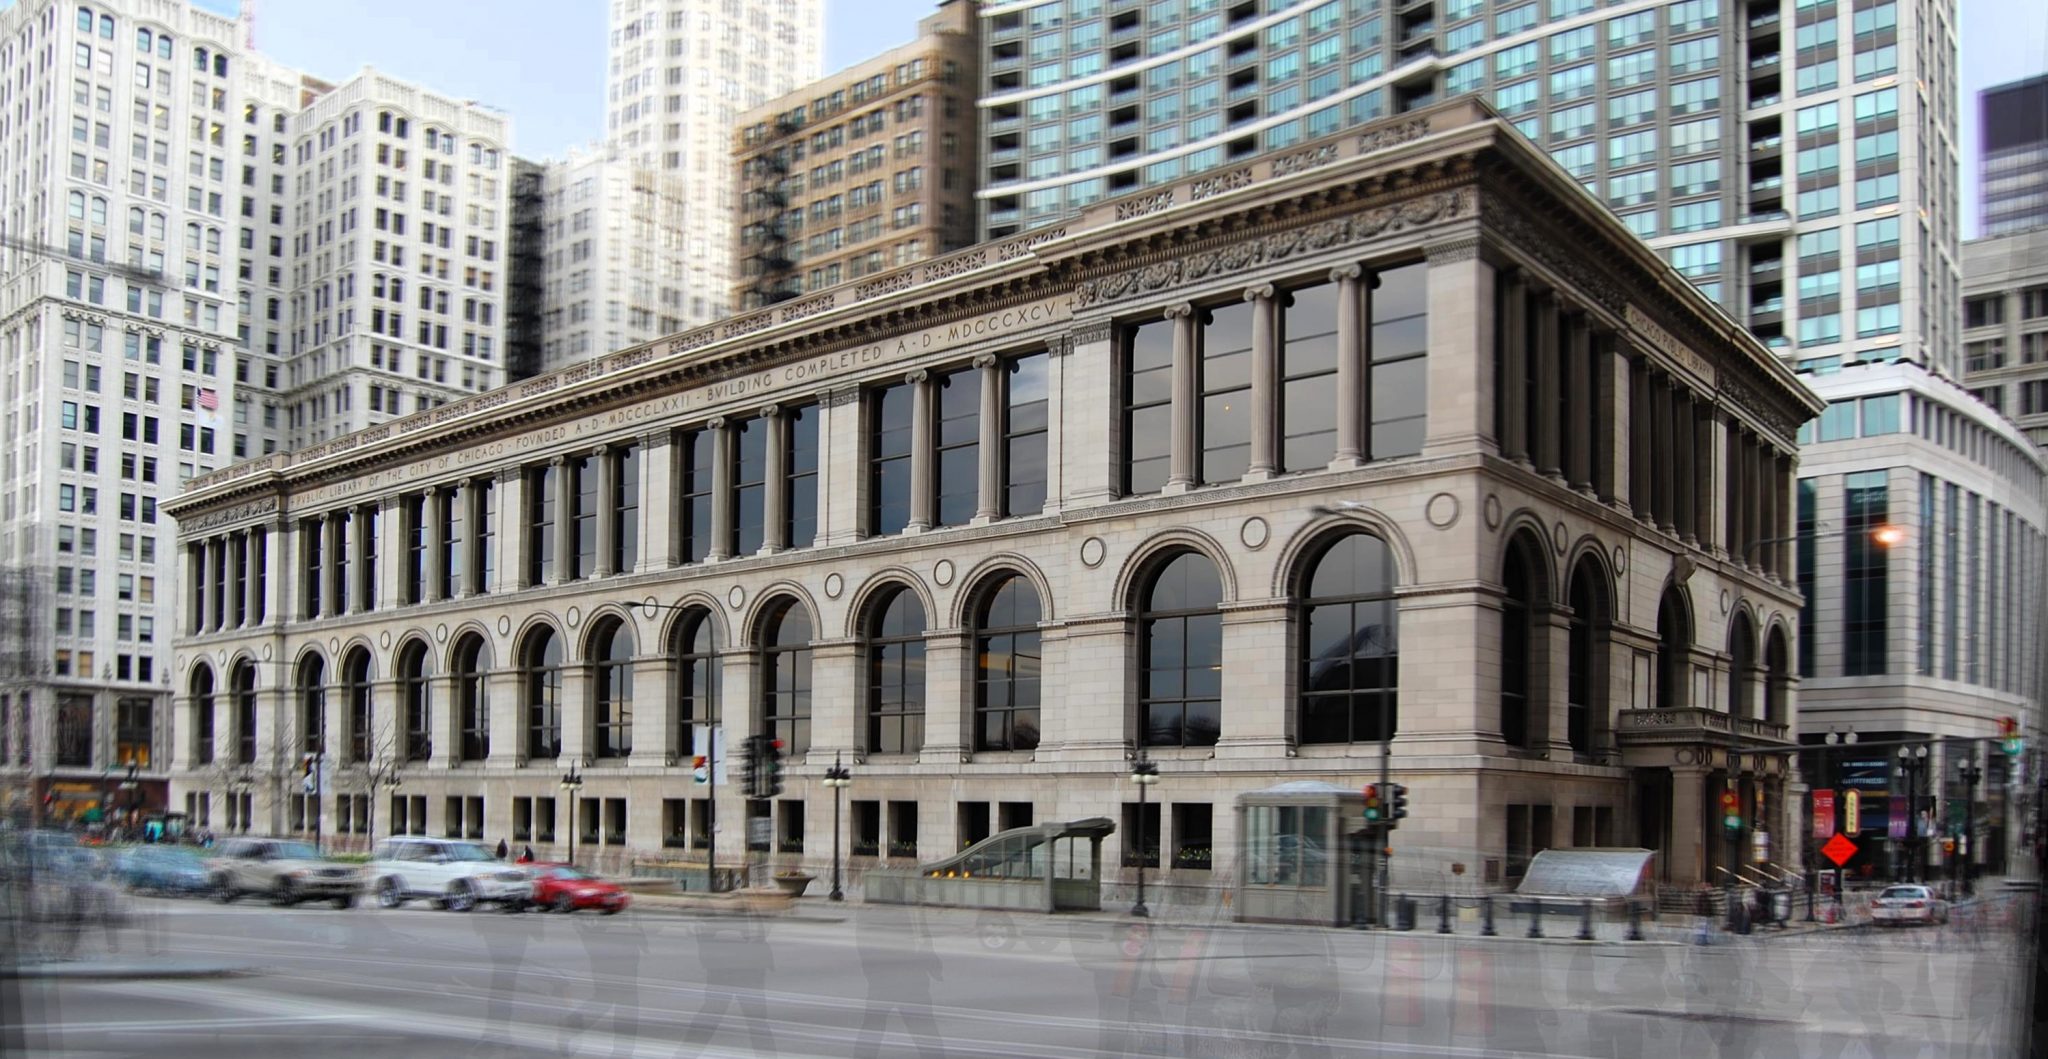 Chicago Cultural Center